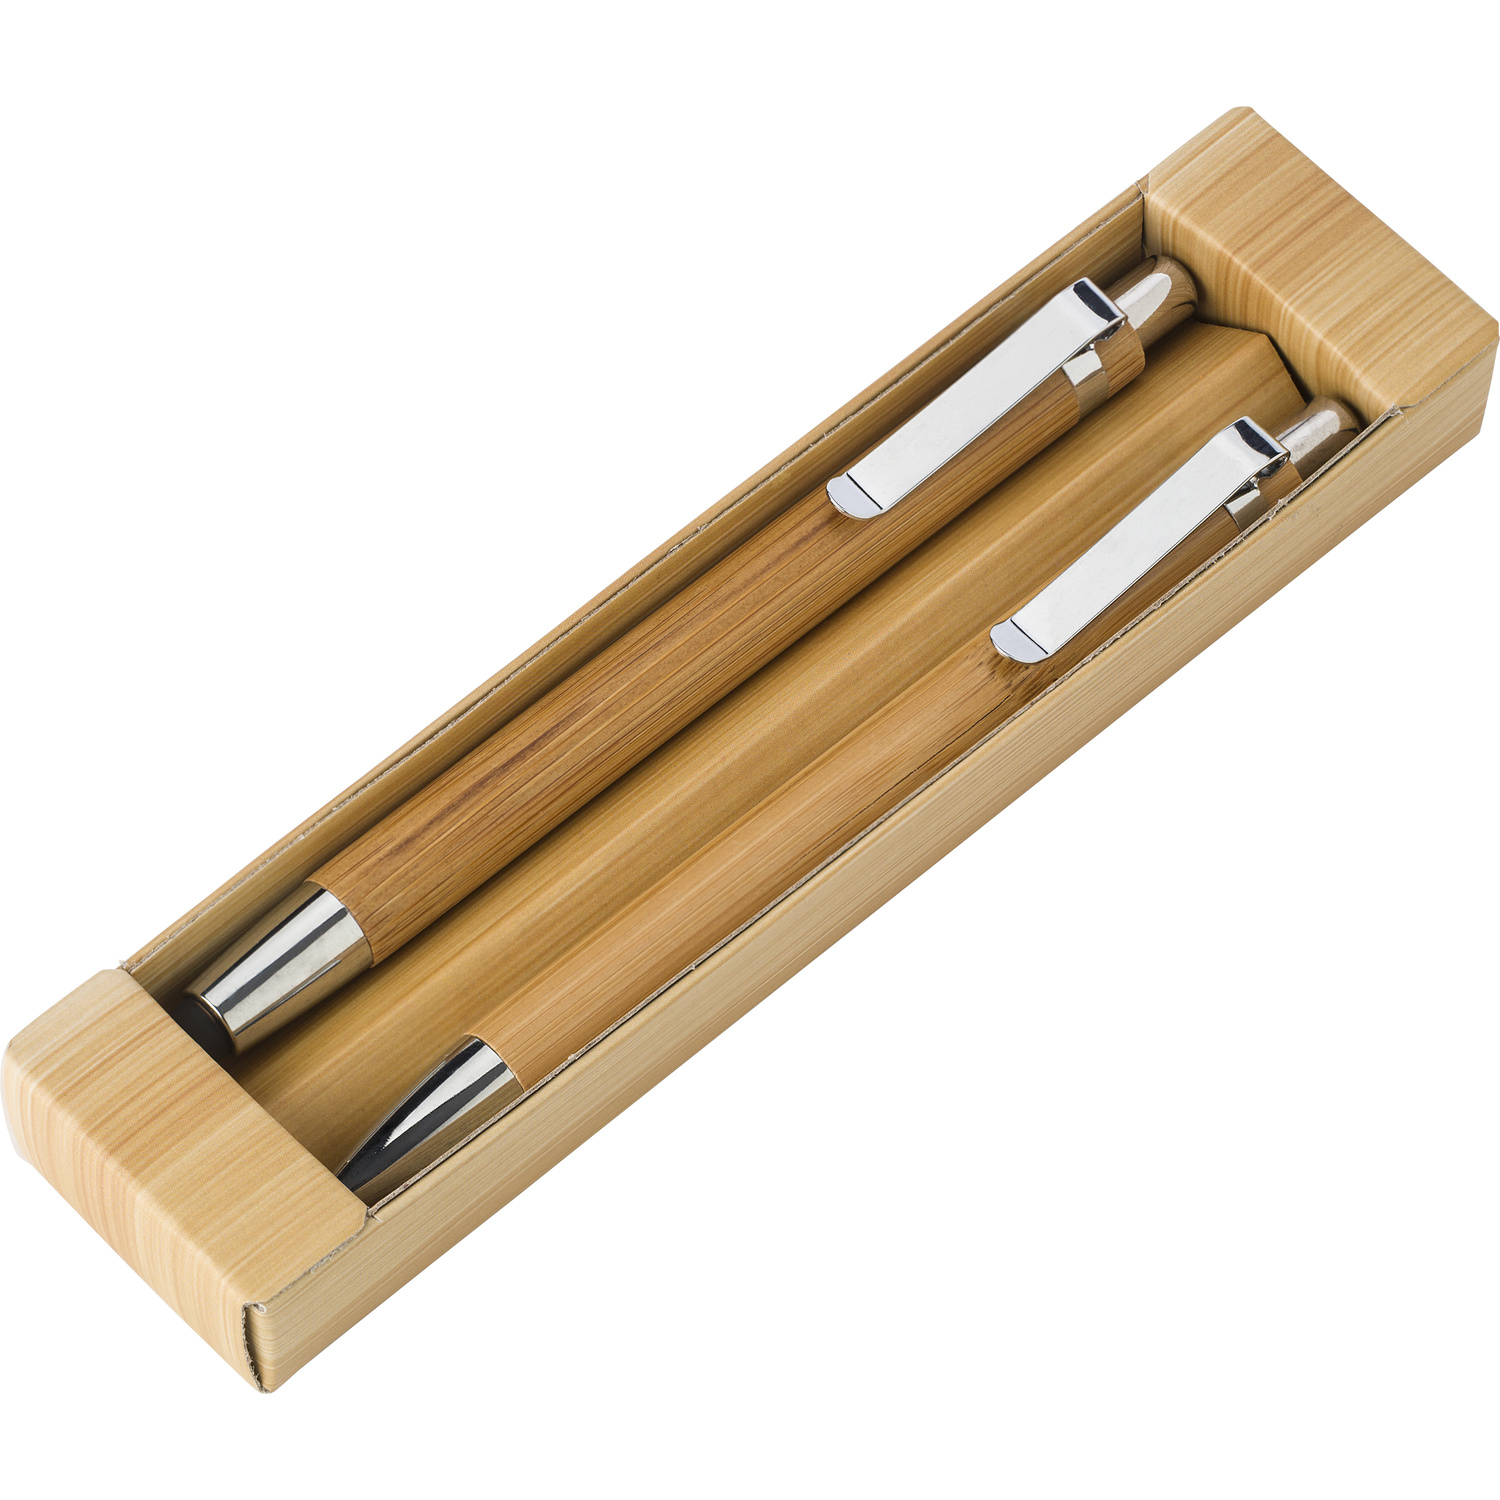 007974 011999999 3d045 gbo pro01 fal - Bamboo pen & pencil set